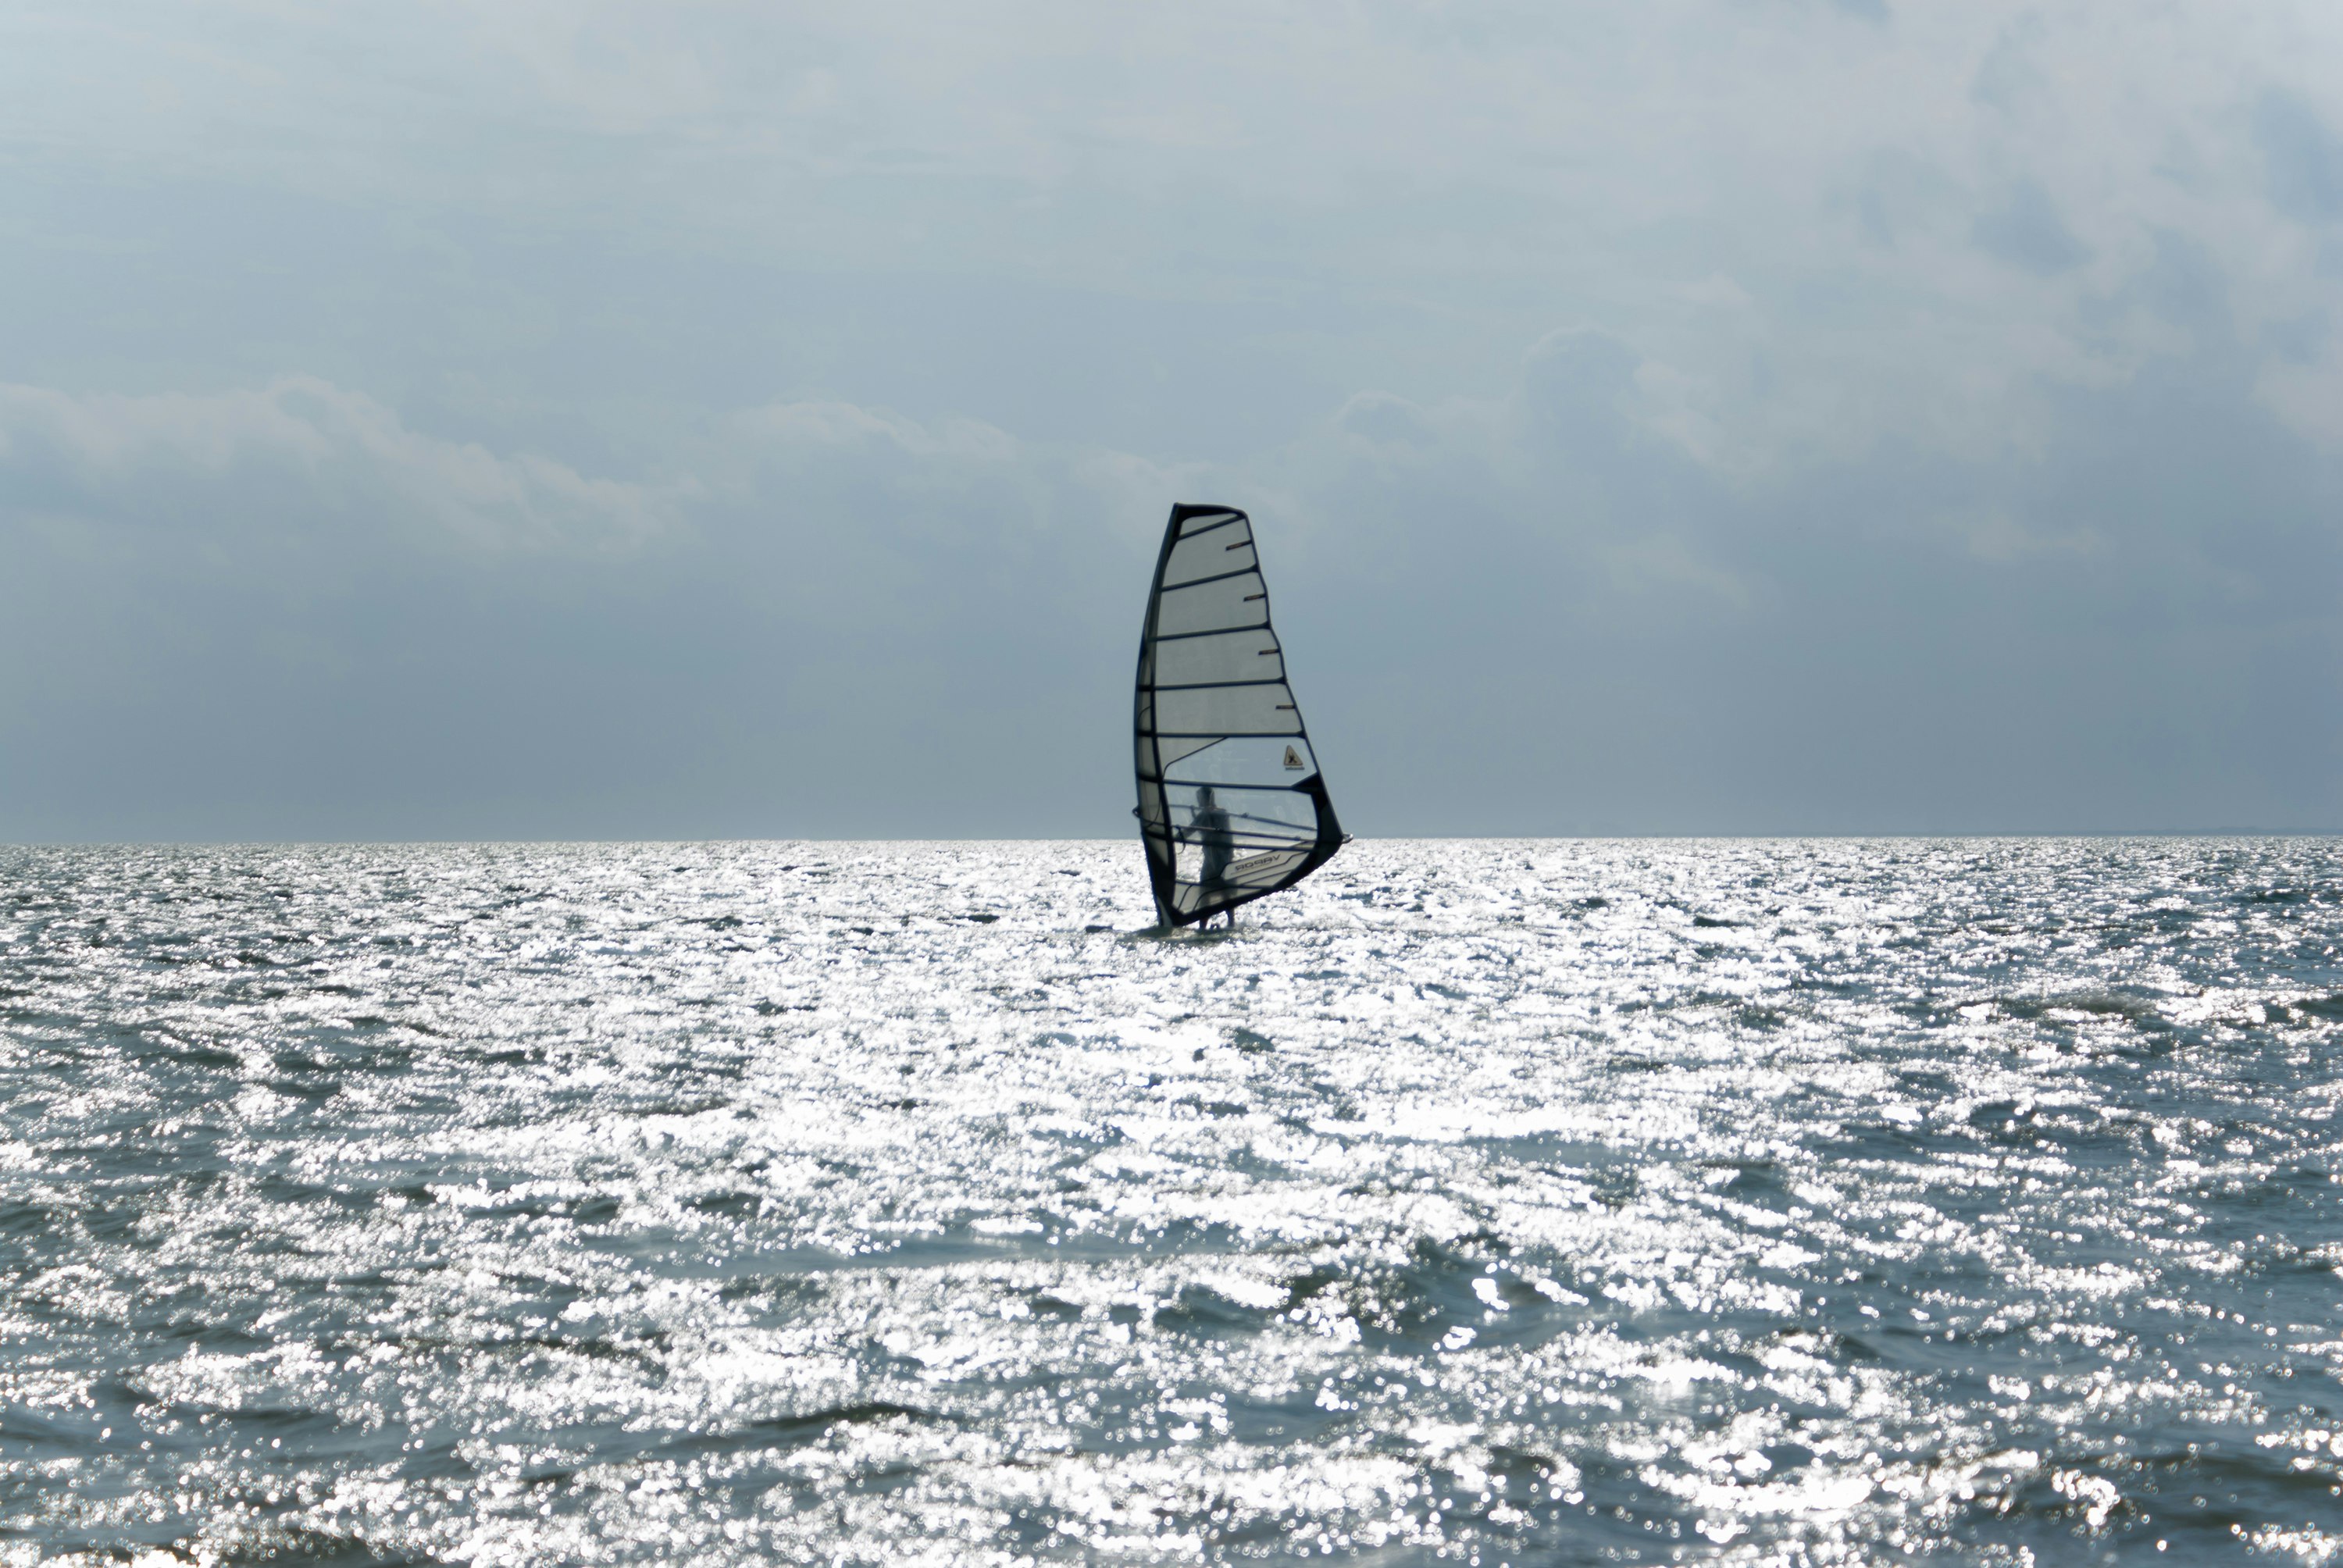 Windsurfer on the water near Key Biscayne, Florida